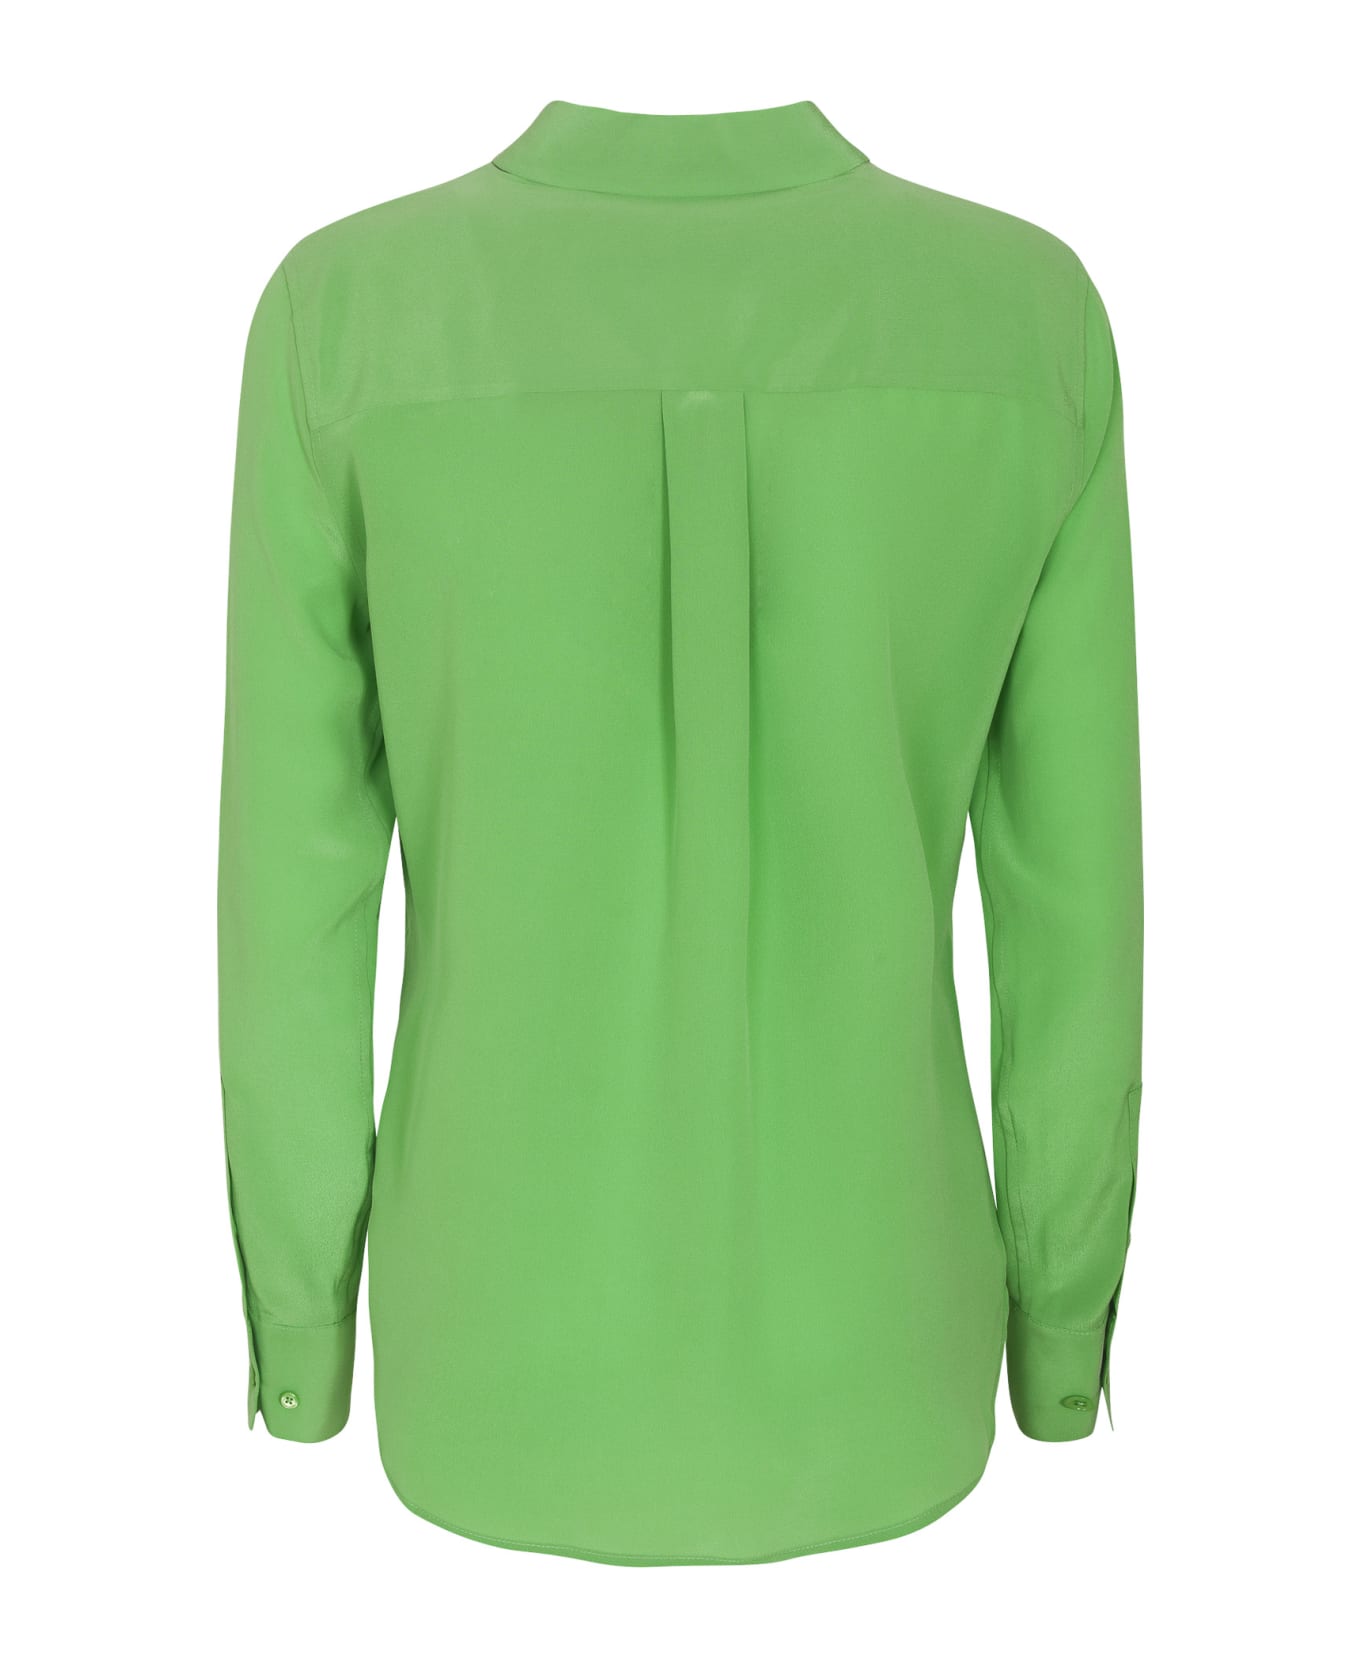 Equipment Round Hem Patched Pocket Plain Shirt - Vibrant Green シャツ